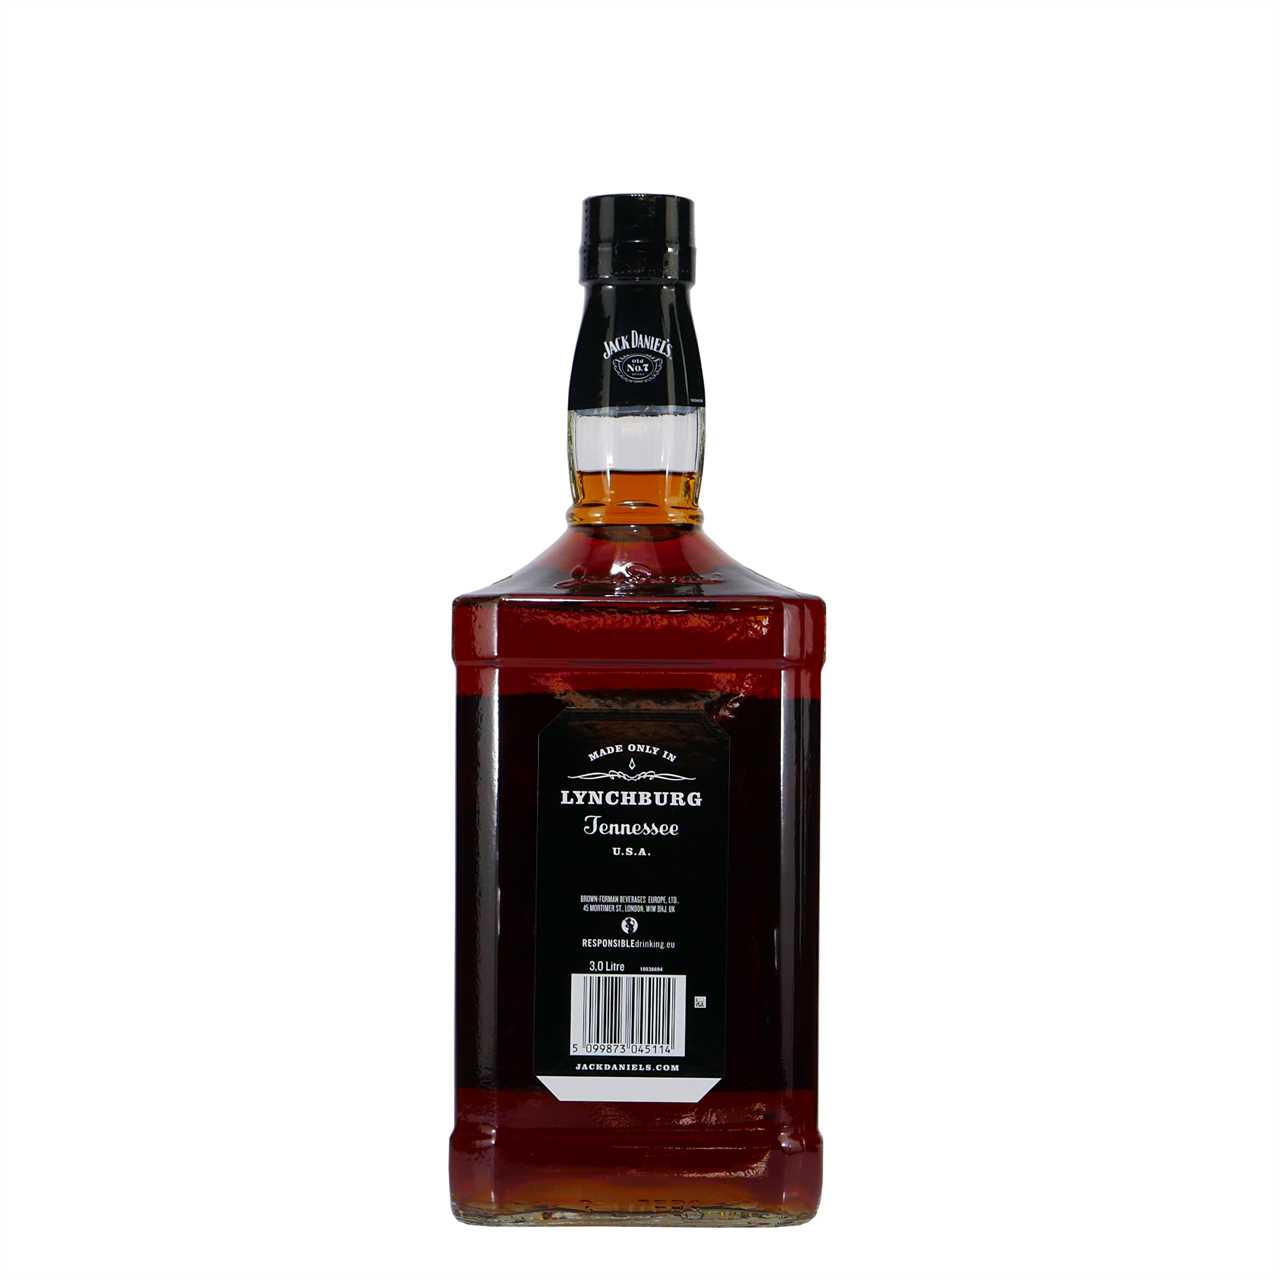 Jack Daniels Old No.7 Whiskey (3,0L)